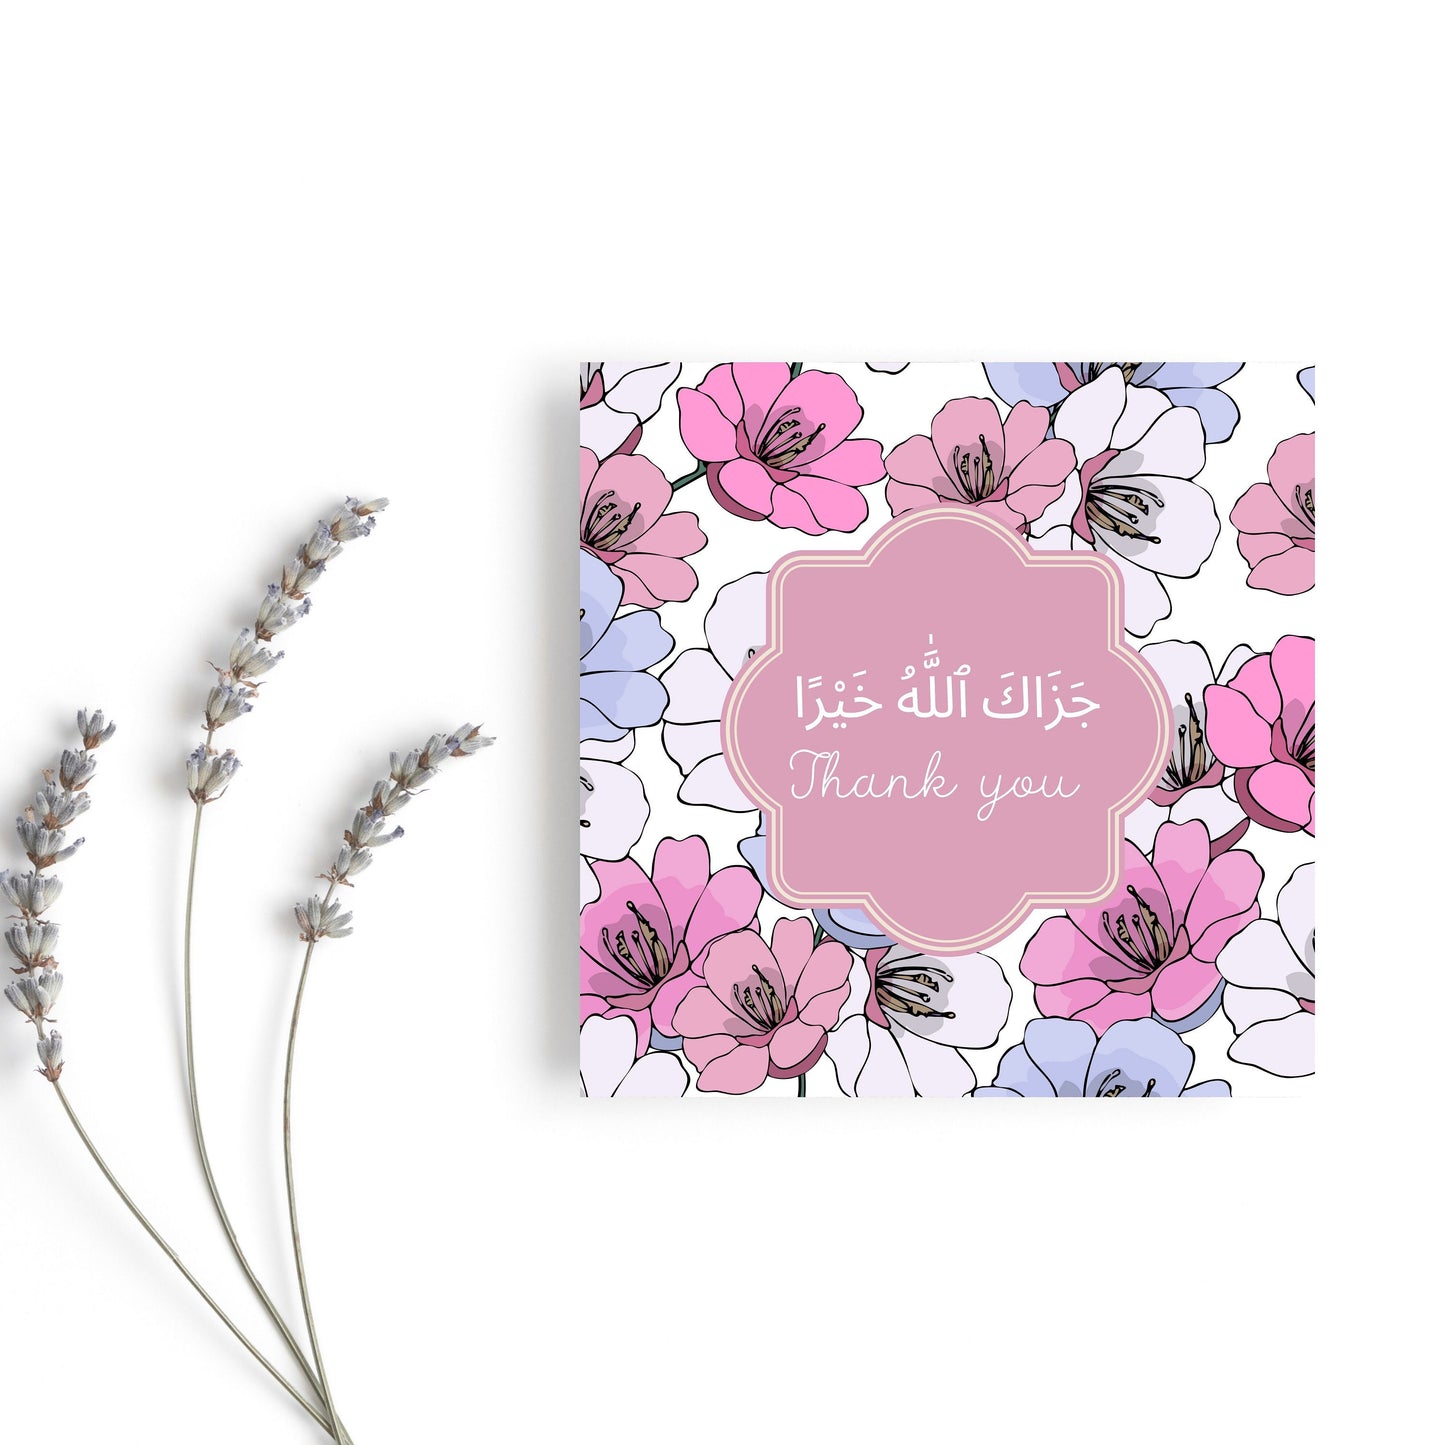 Jazak Allah Khairan, Islamic Greeting card saying Thank you in purple floral background